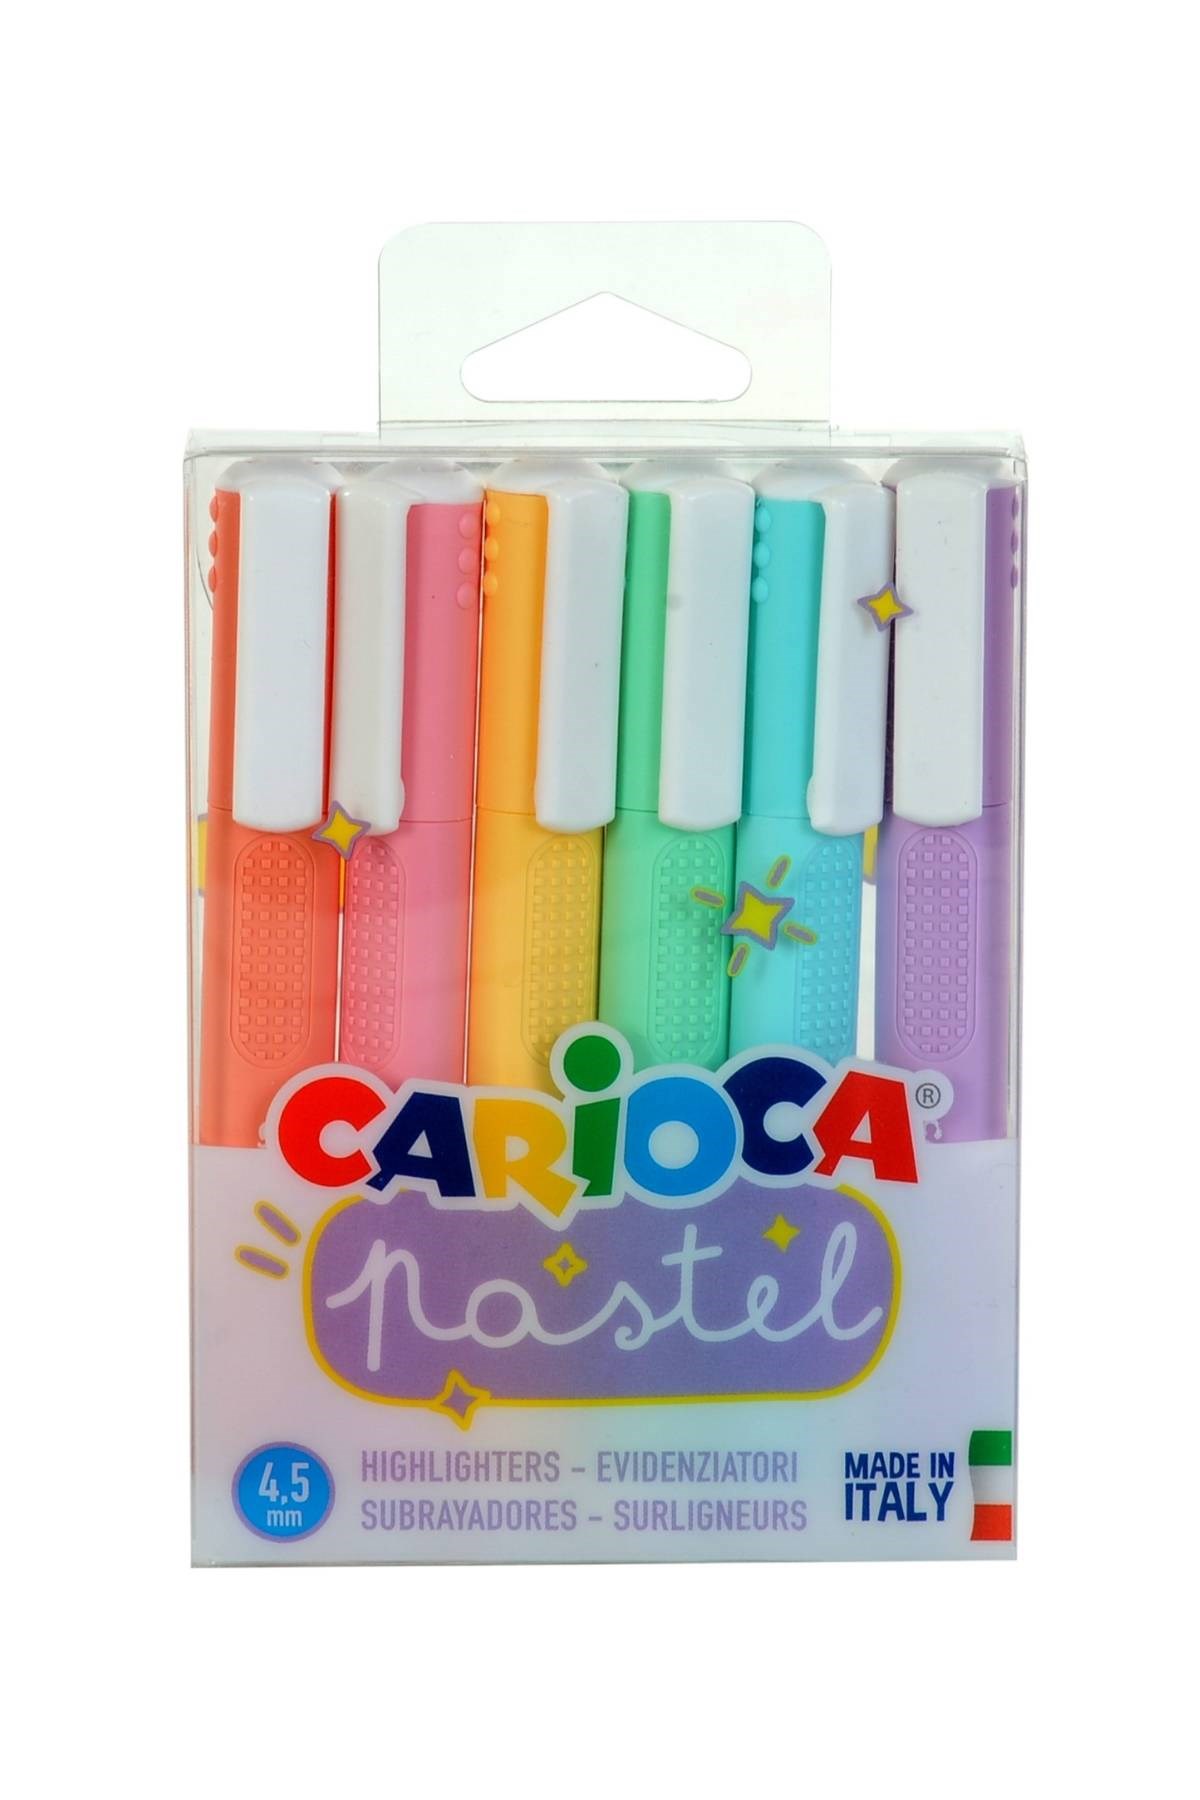 Carioca Pastel İşaretleme Kalemi 6 Lı